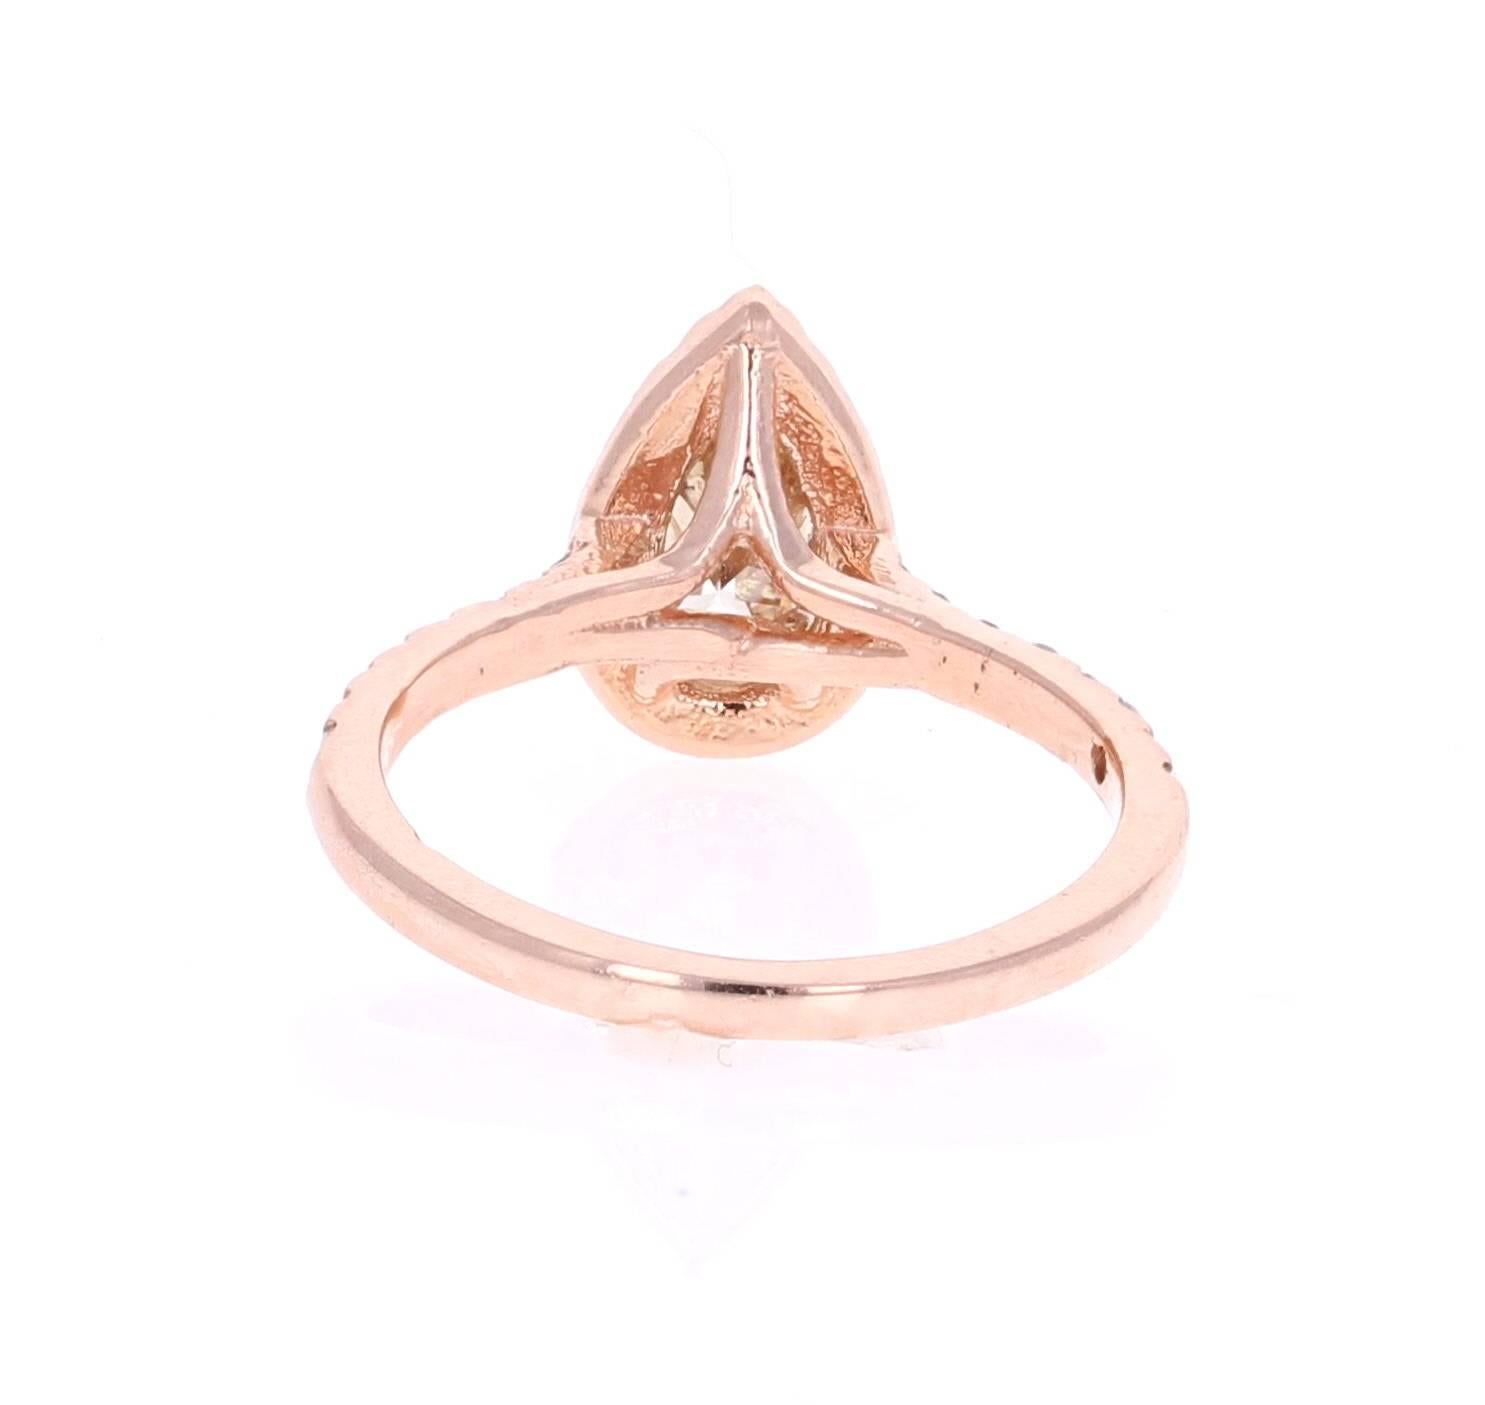 Modern 1.55 Carat Fancy Pear Cut Diamond Engagement Ring in 14K Rose Gold